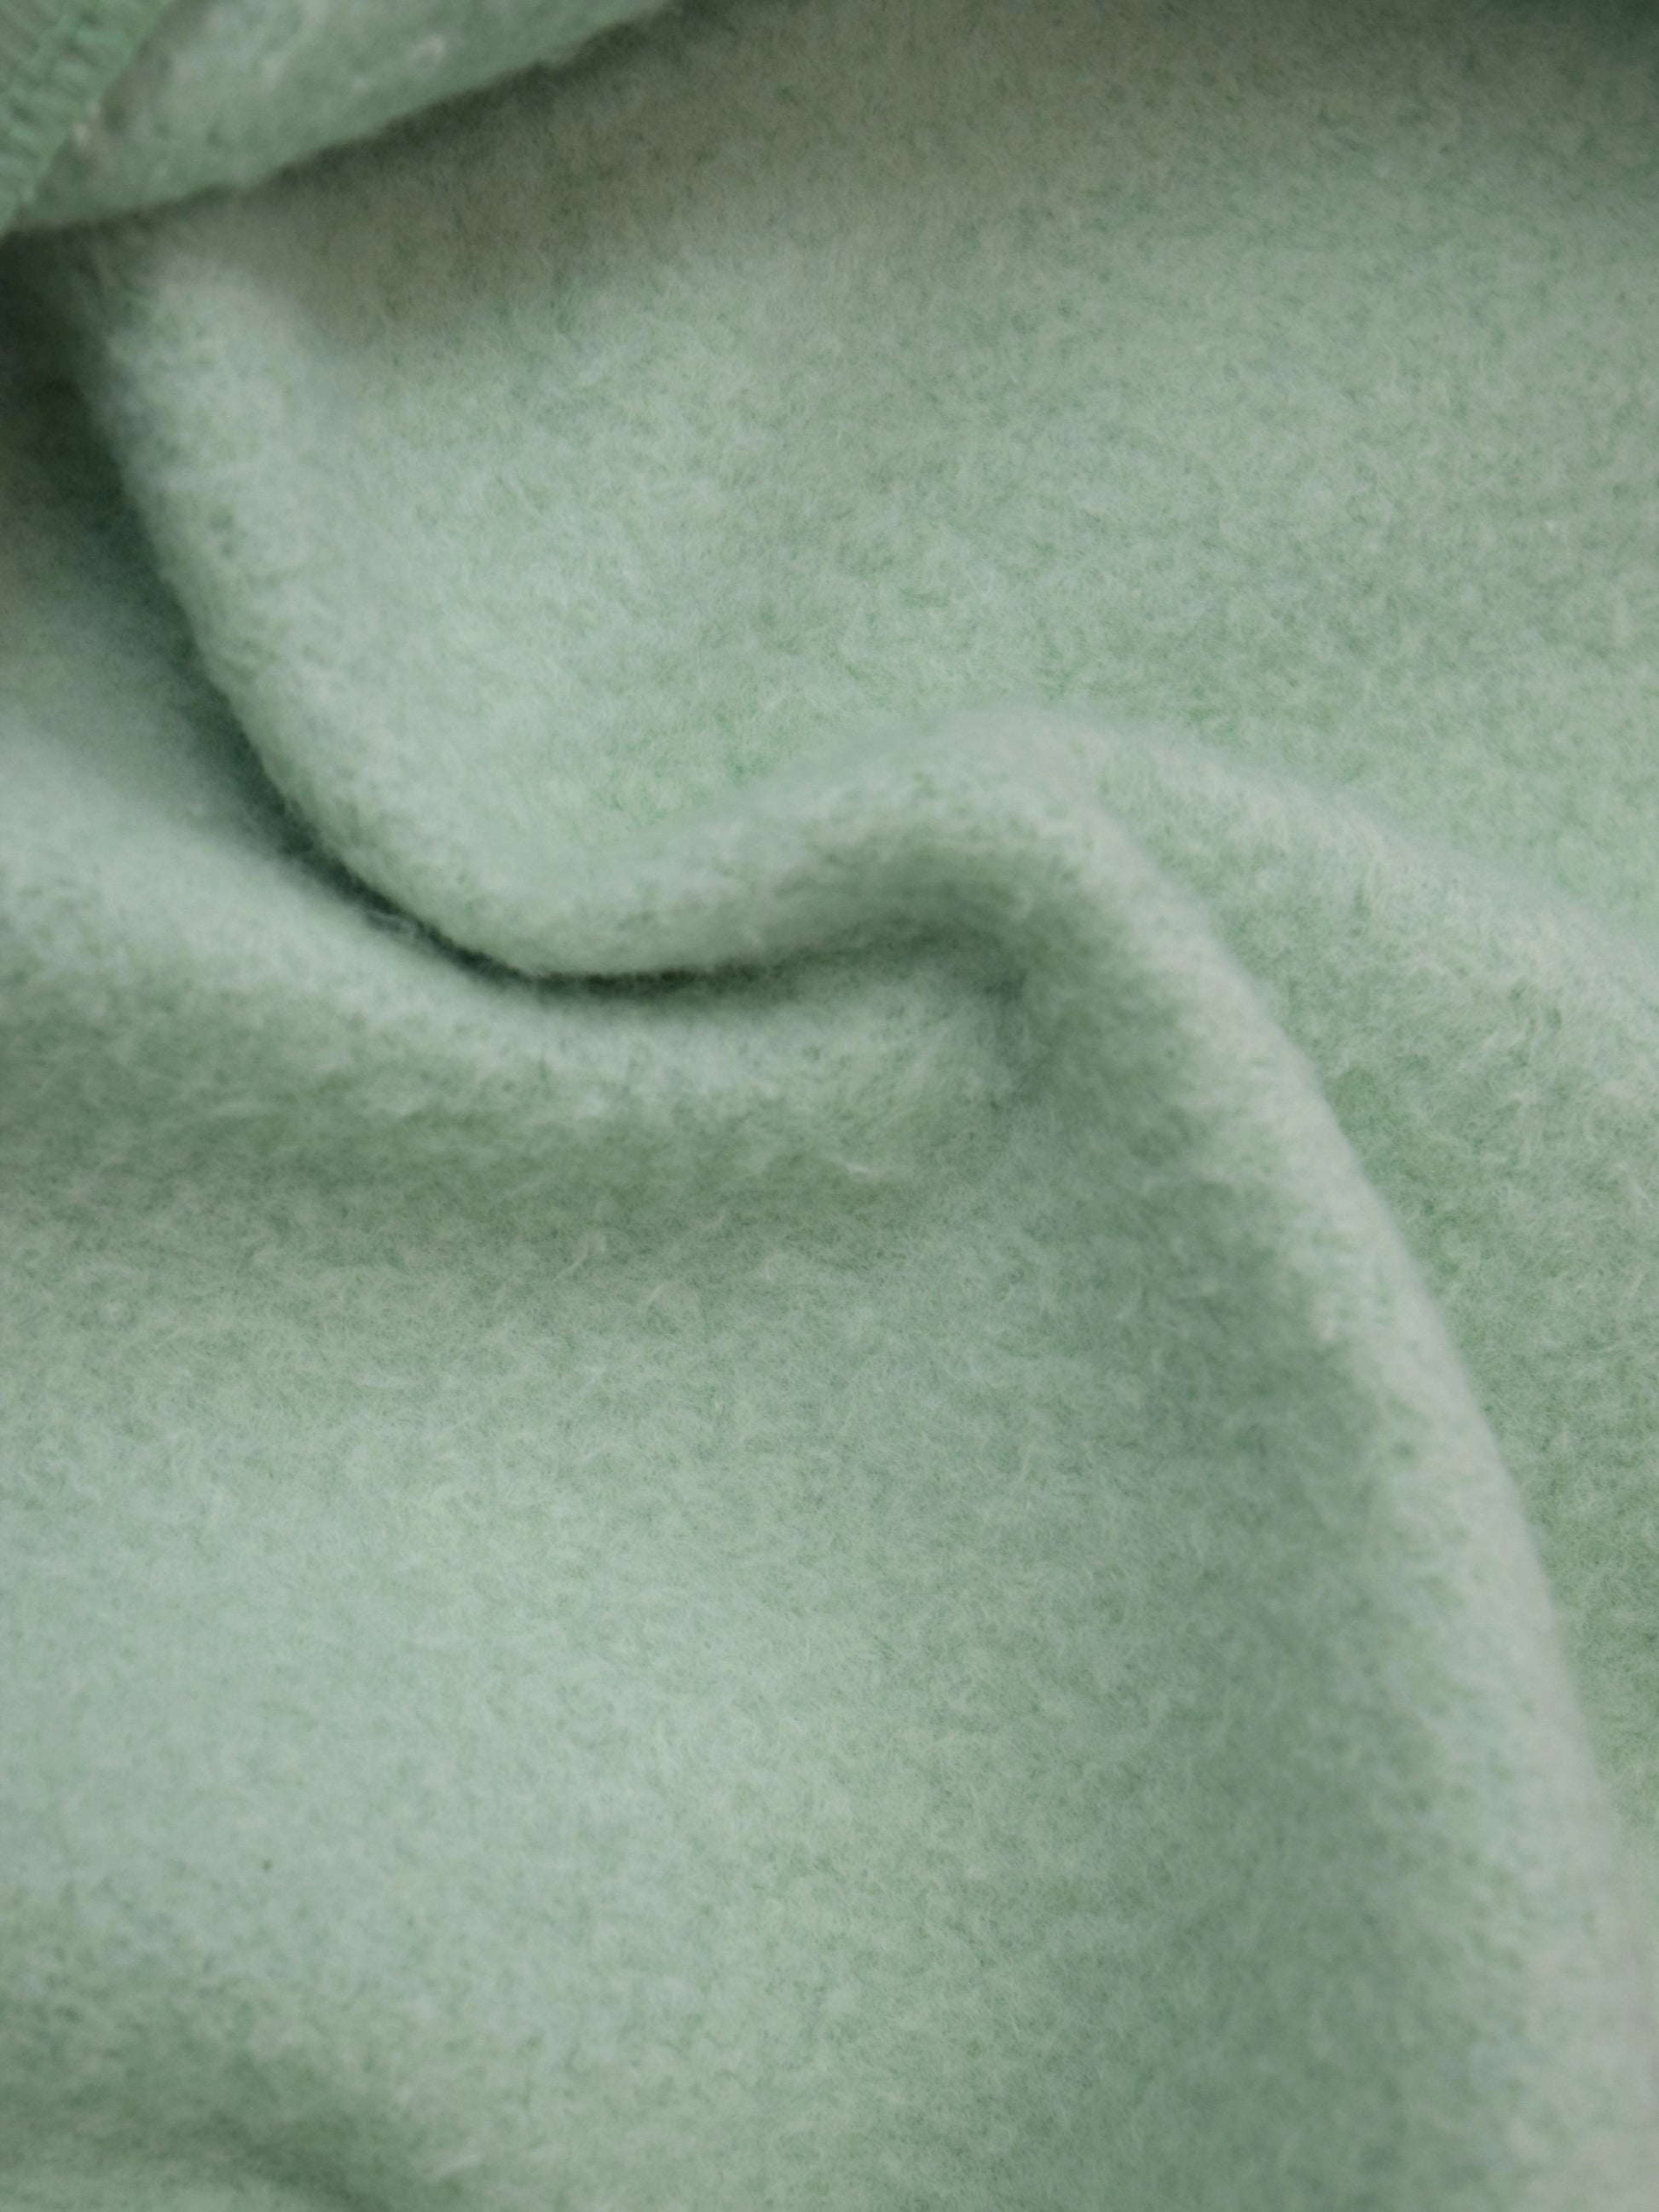 Close up of warm fleece interior